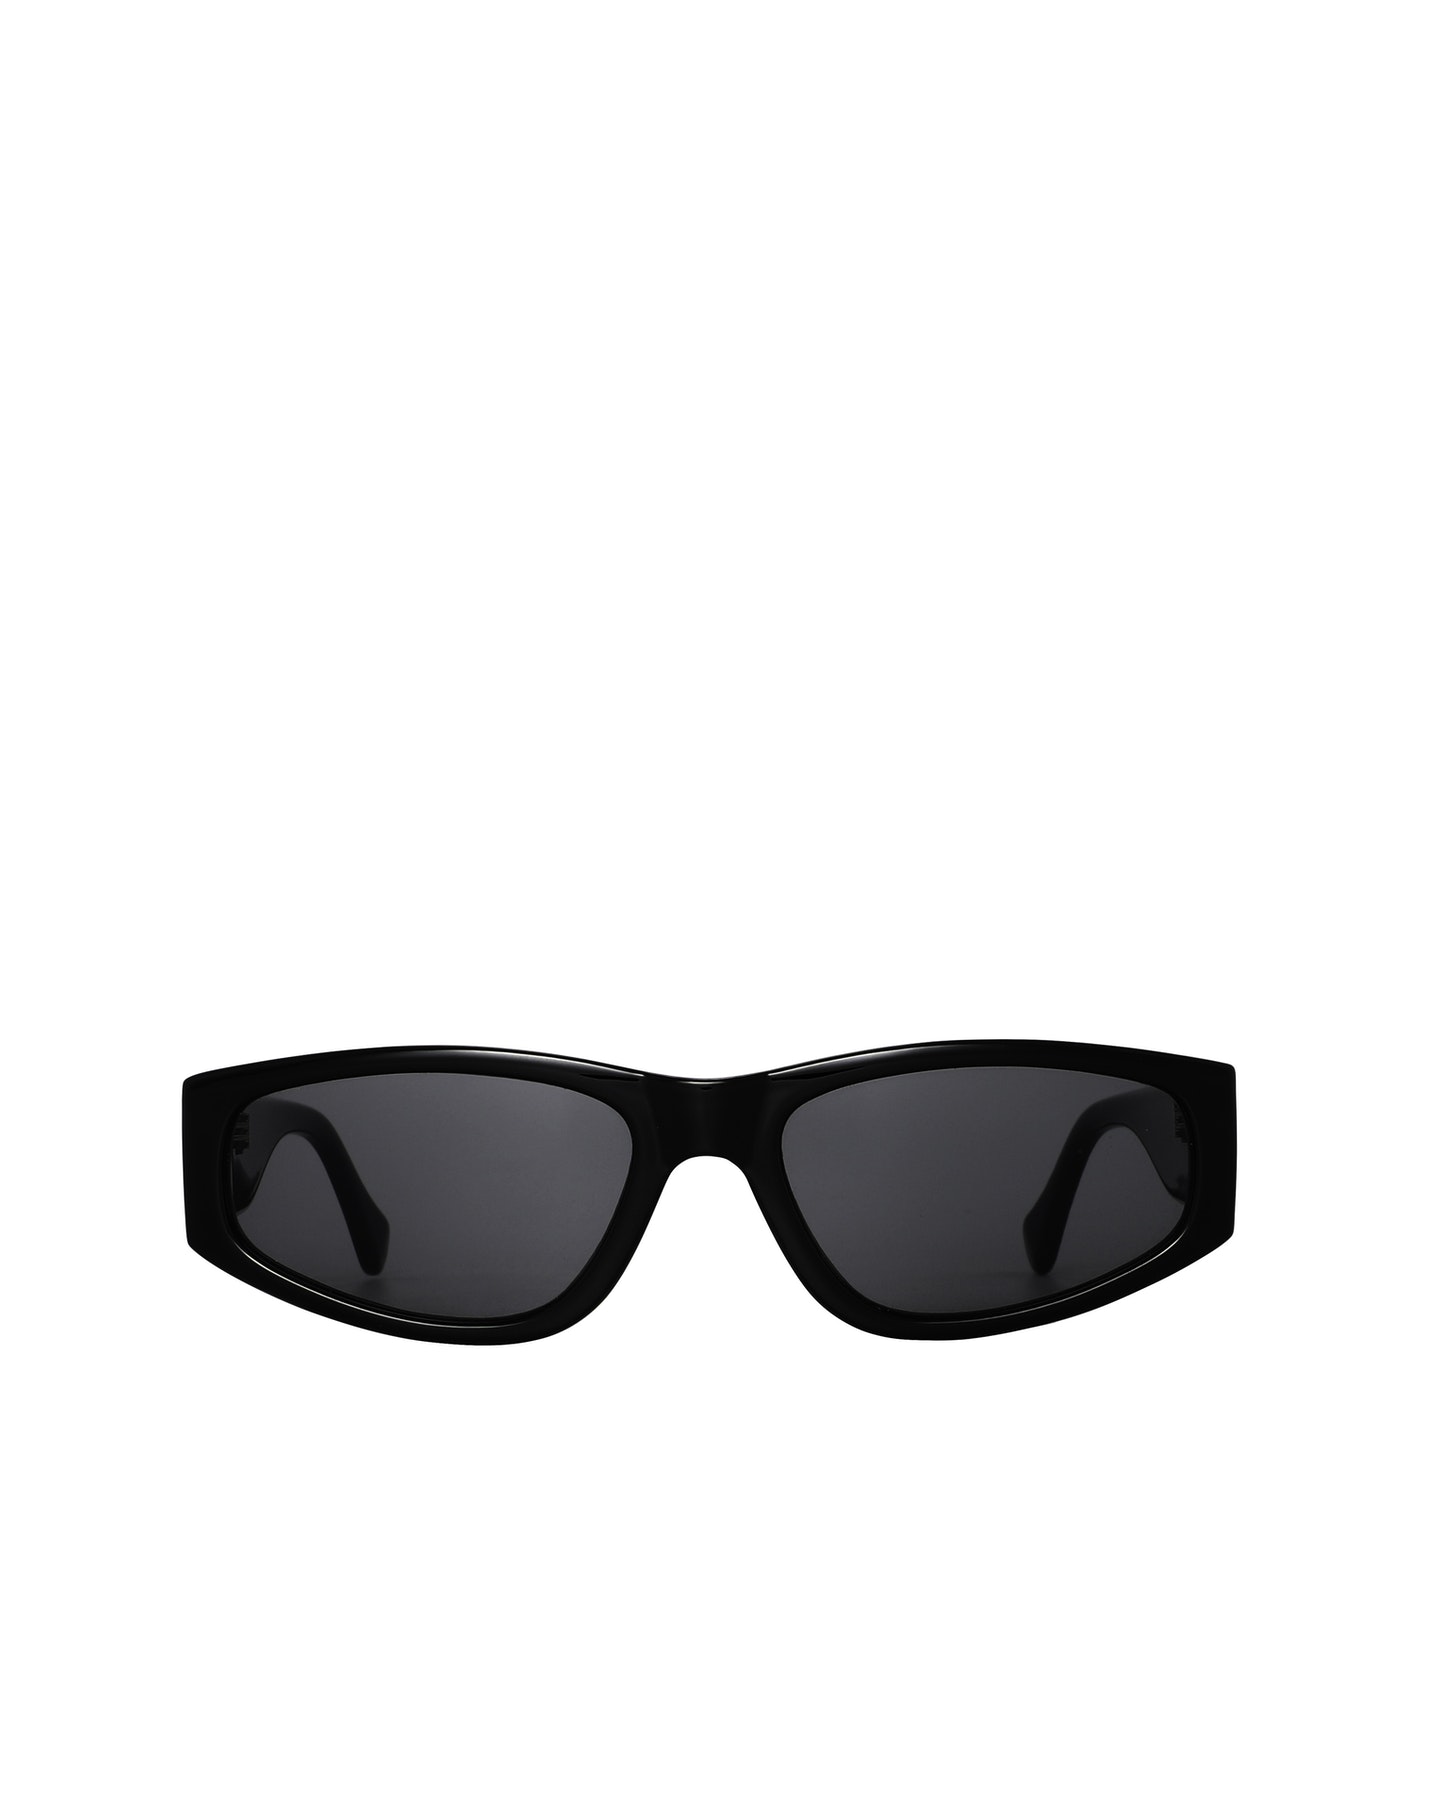 Reality Eyewear The Rush Sunglasses - Black | SurfStitch